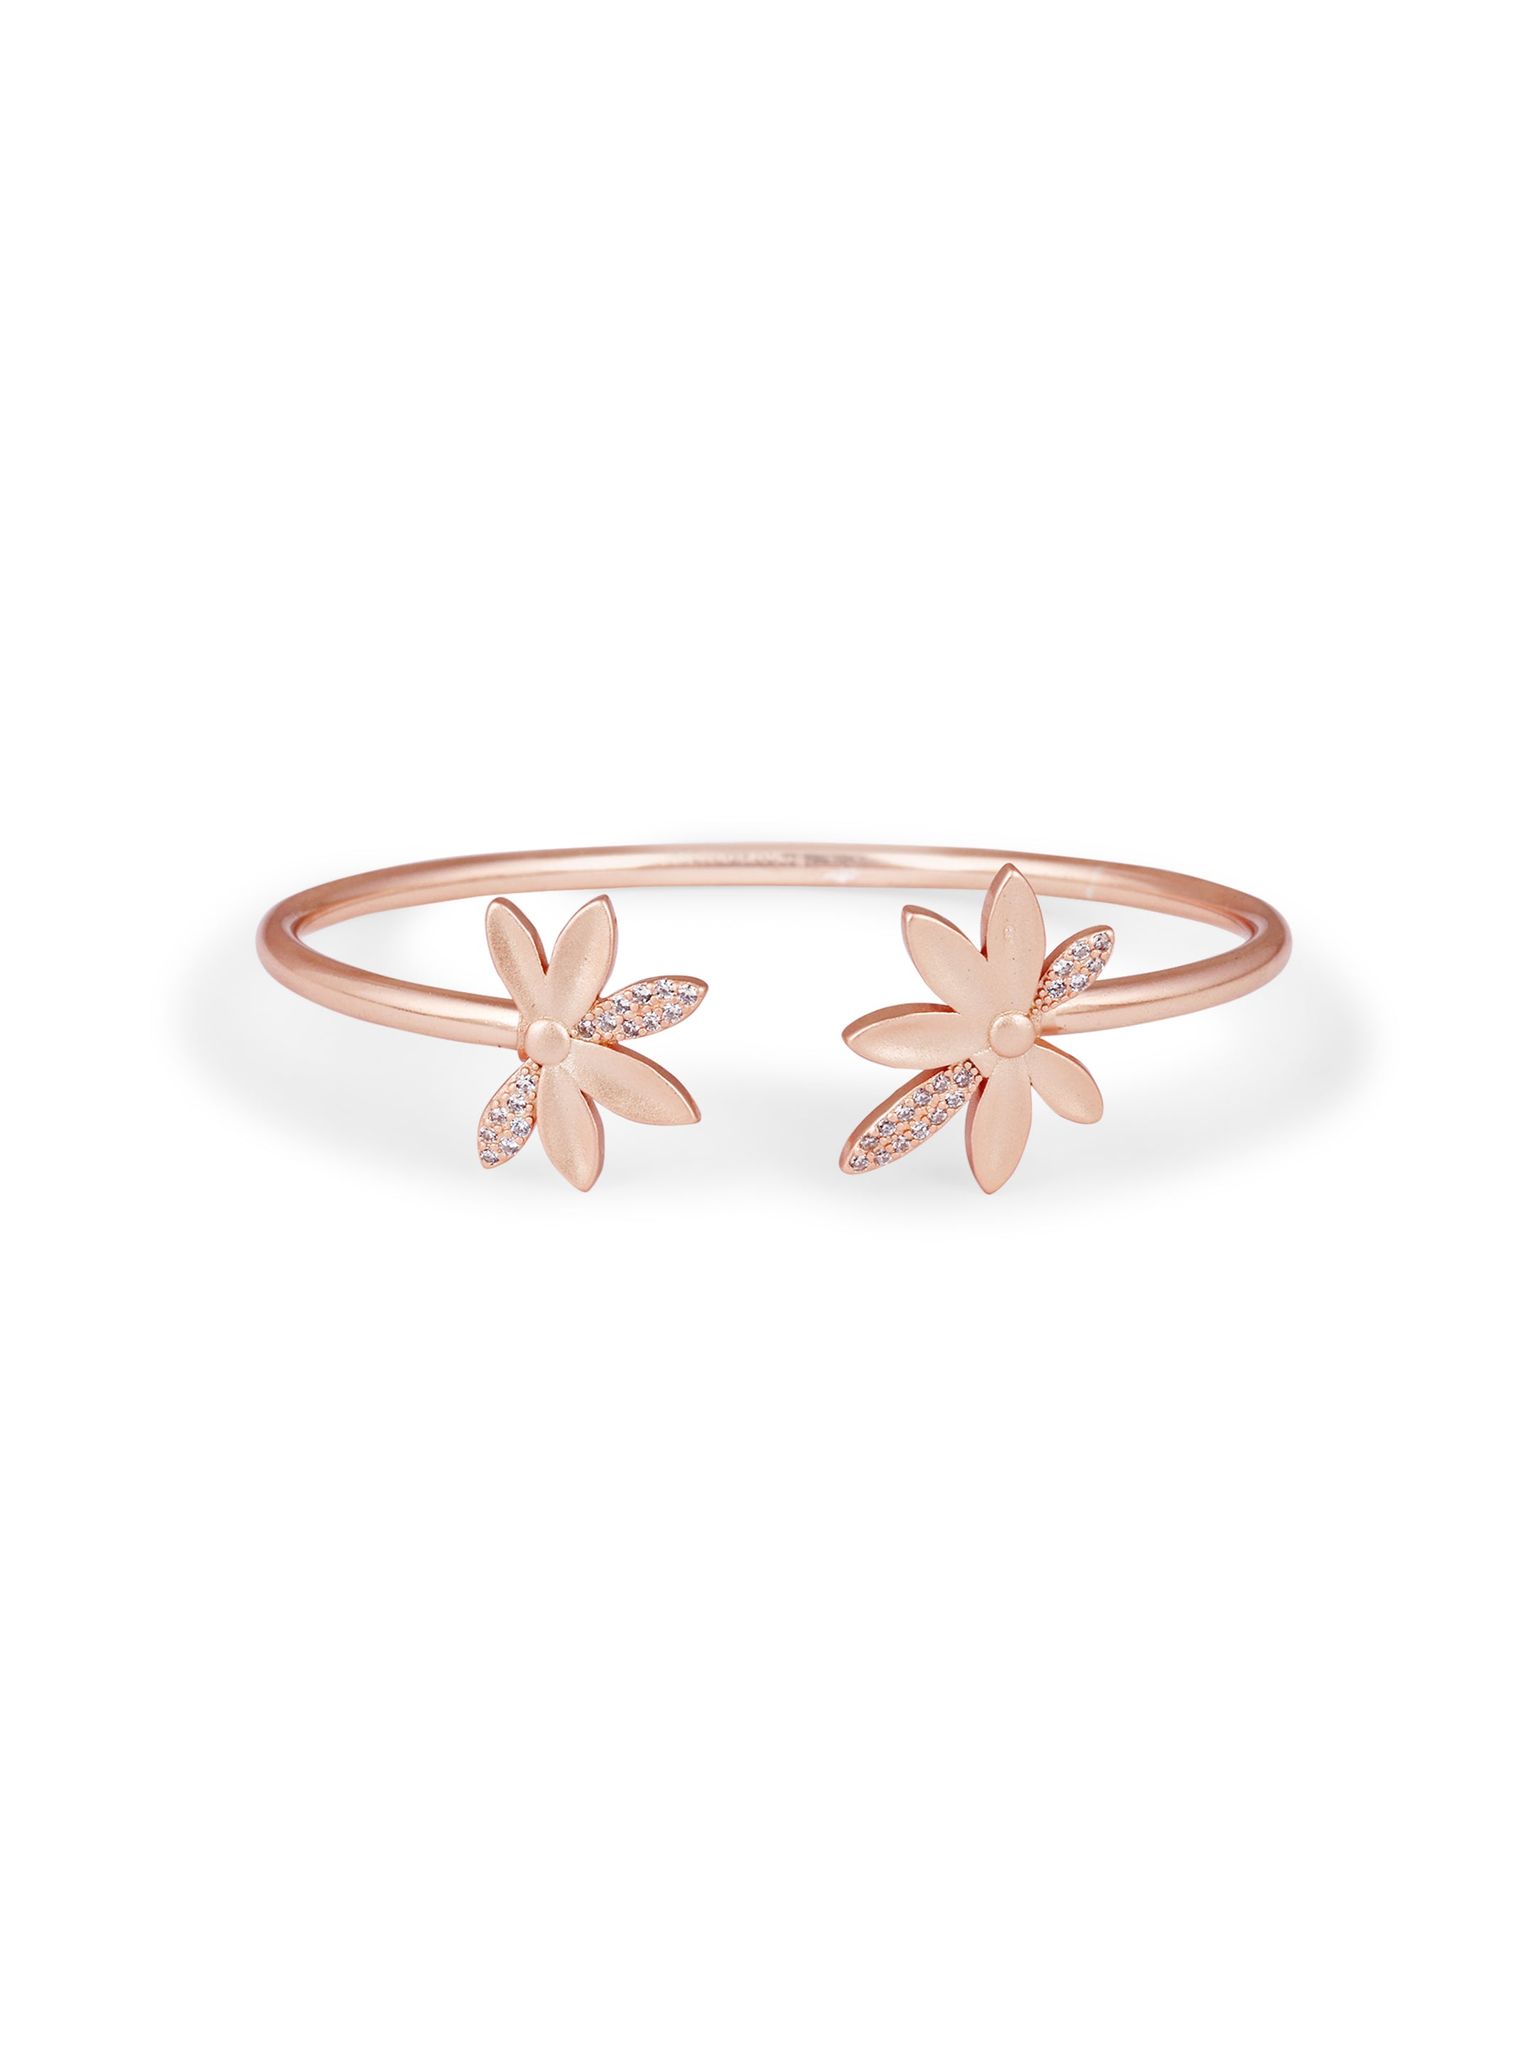 Dual Flower rose gold bracelet